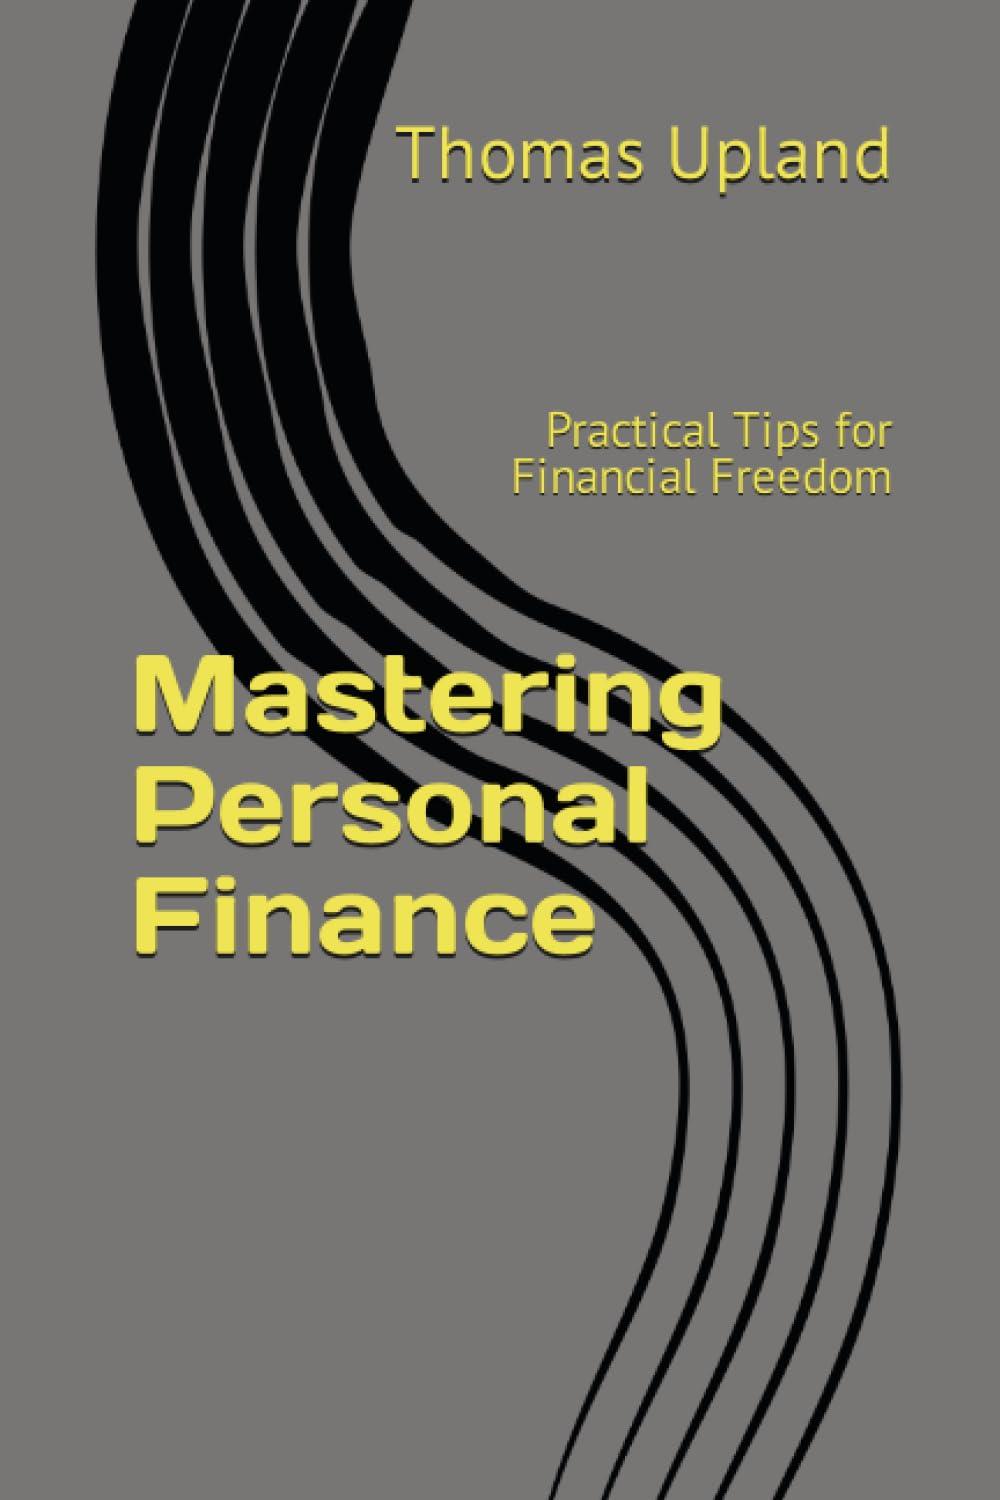 mastering personal finance 1st edition thomas upland b0c8rfbsvc, 979-8399080970